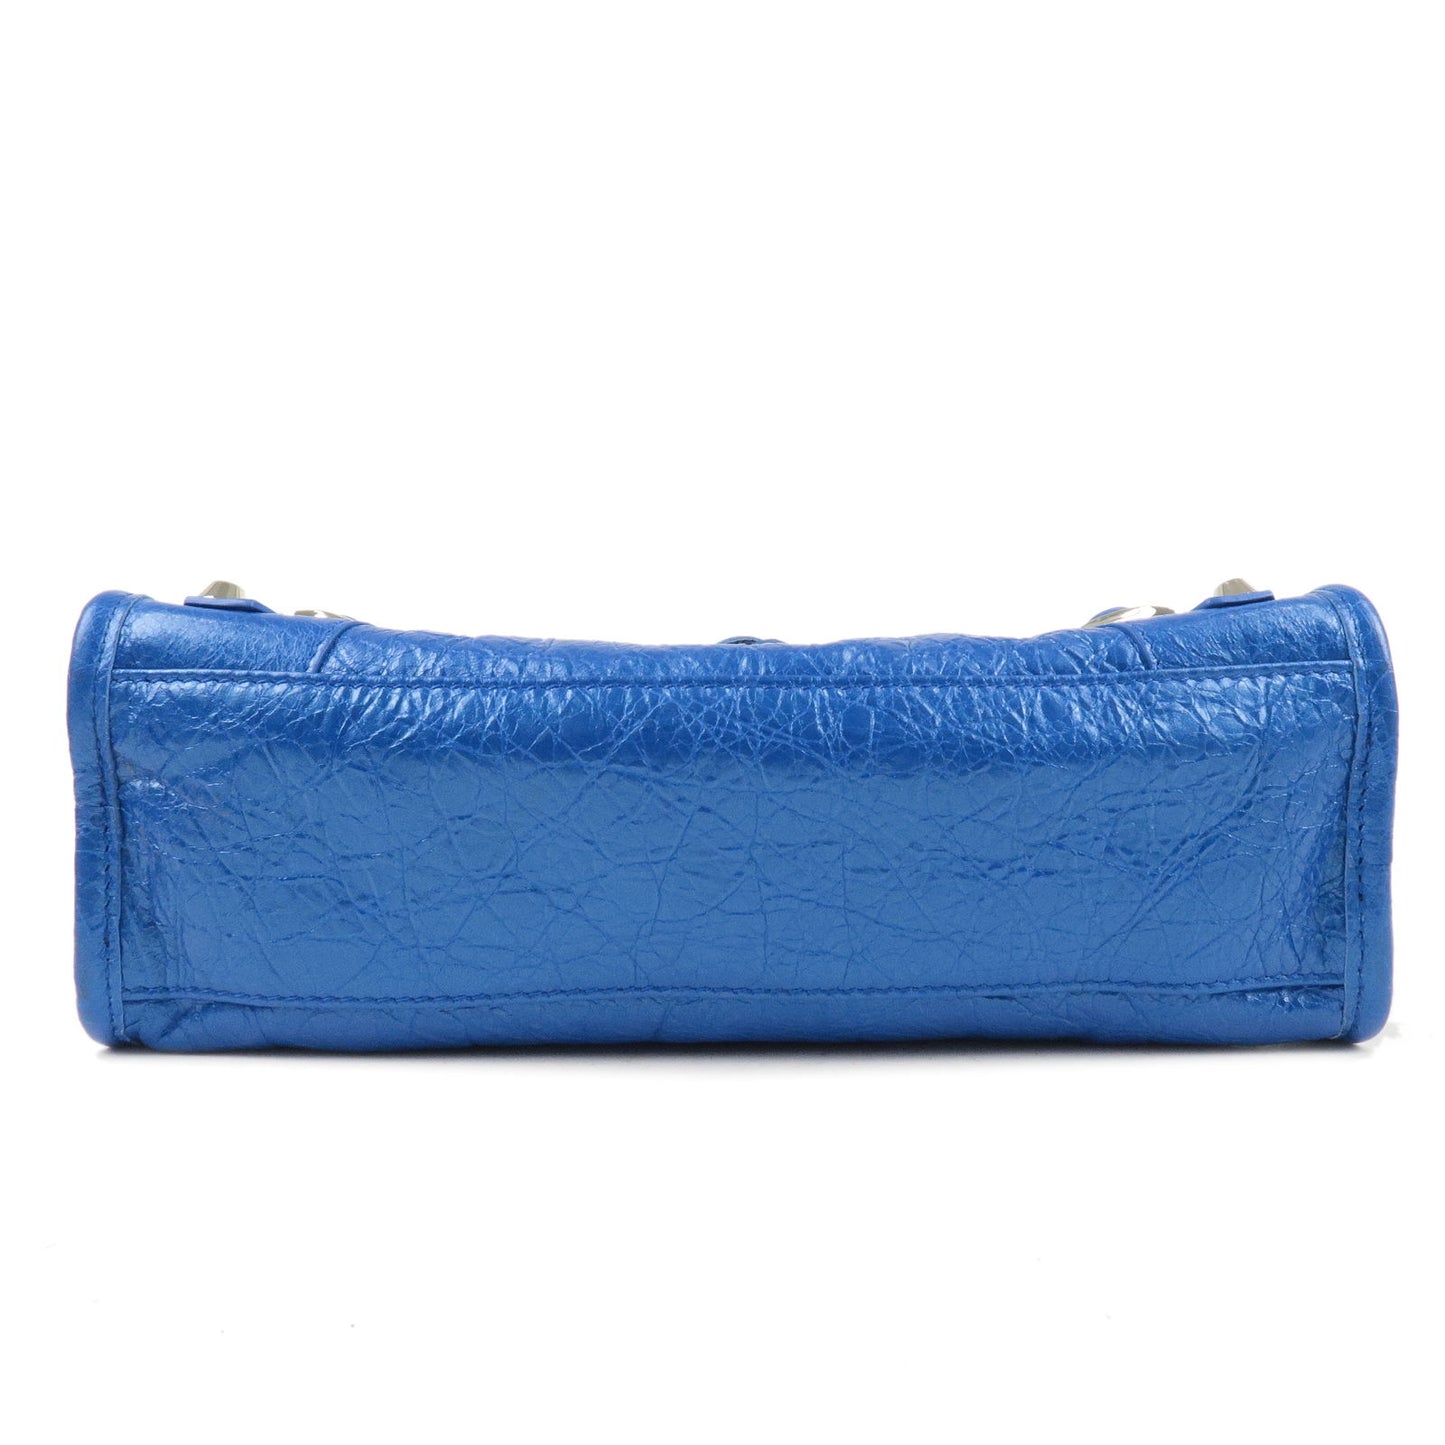 BALENCIAGA Leather Classic Mini City 2Way Hand Bag Blue